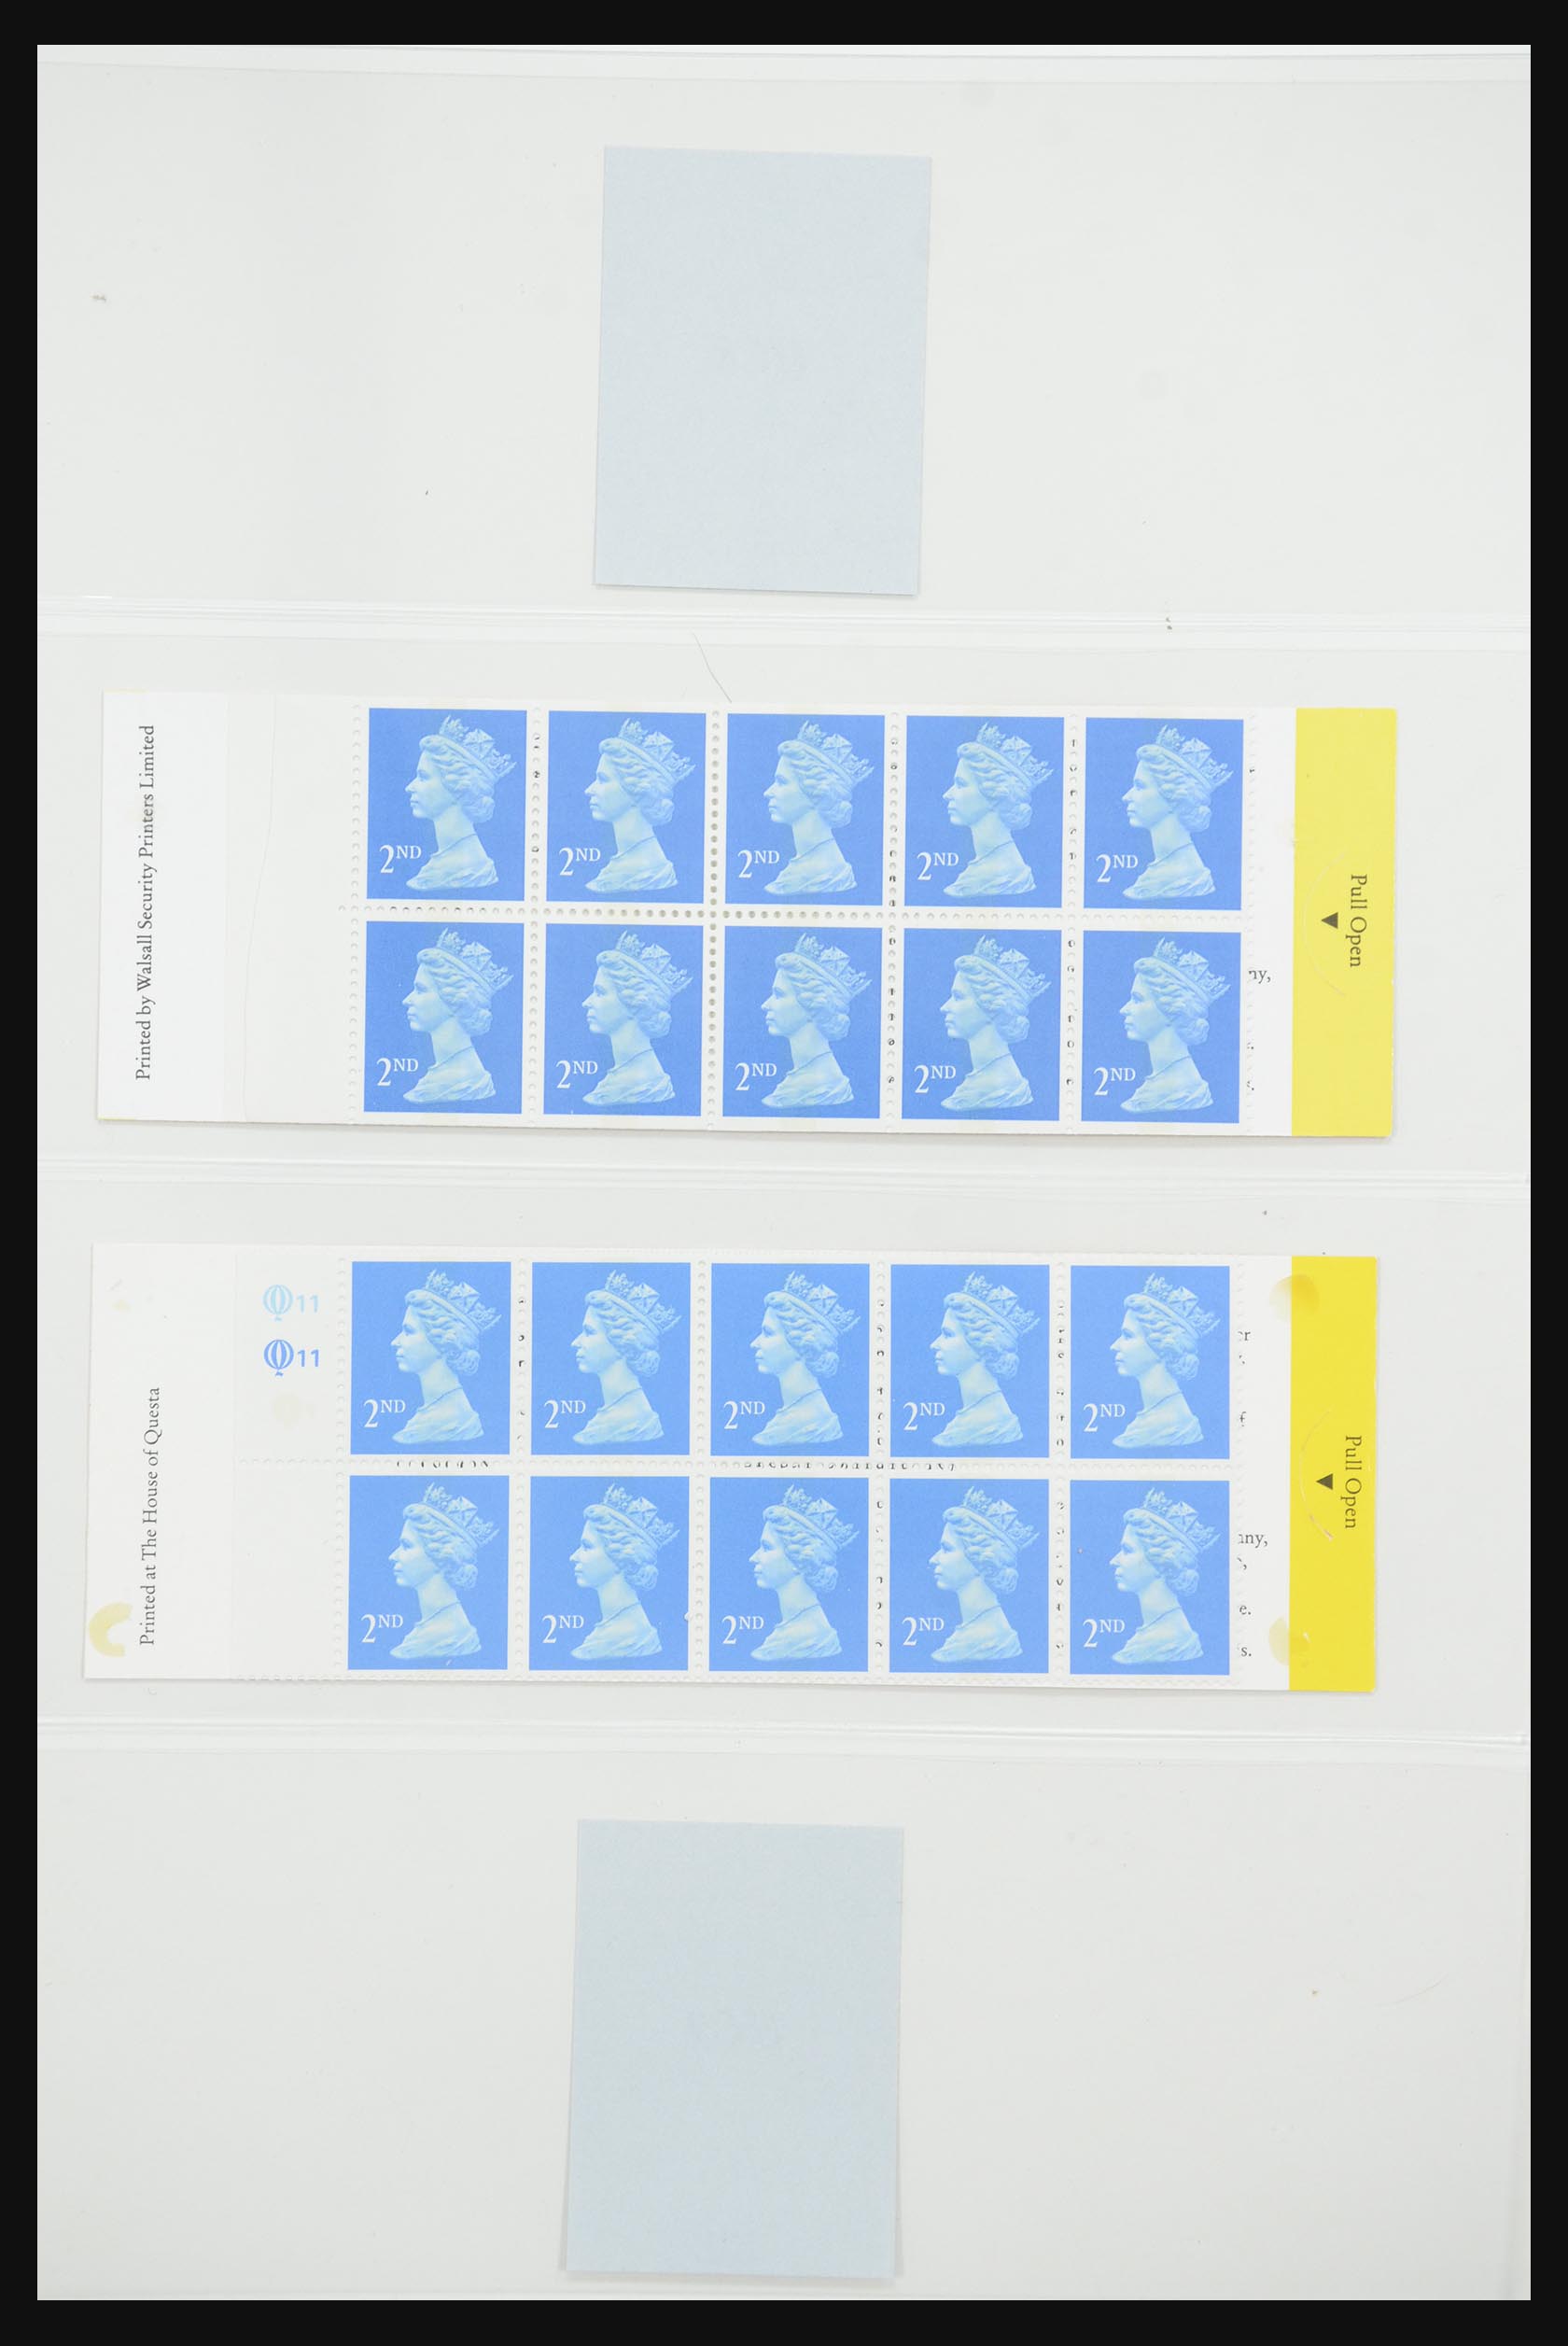 31960 072 - 31960 Great Britain stampbooklets 1989-2000.